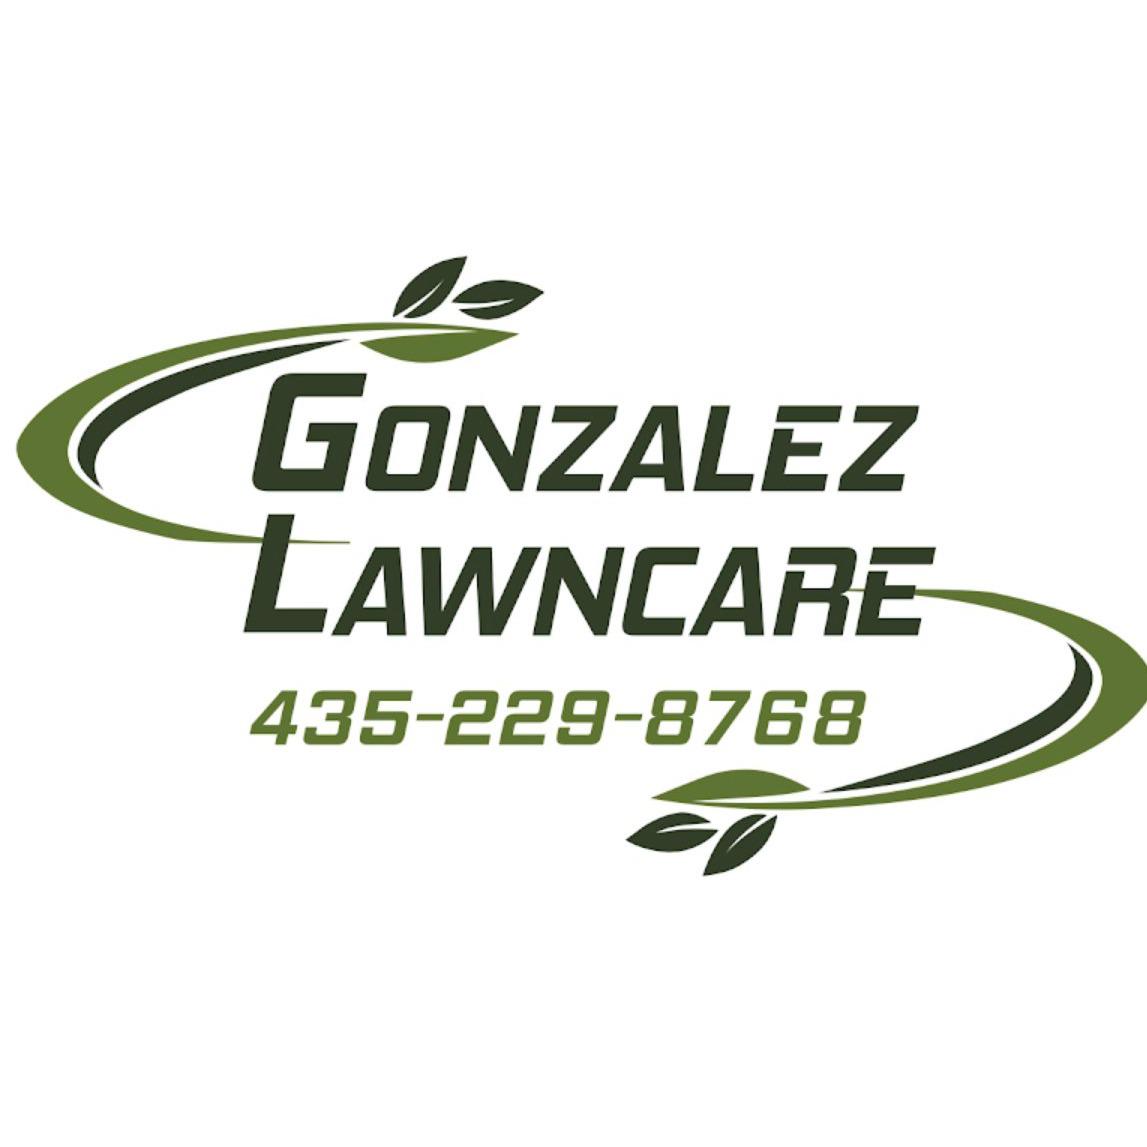 Gonzalez Lawn Care - Hurricane, UT - (435)229-8768 | ShowMeLocal.com